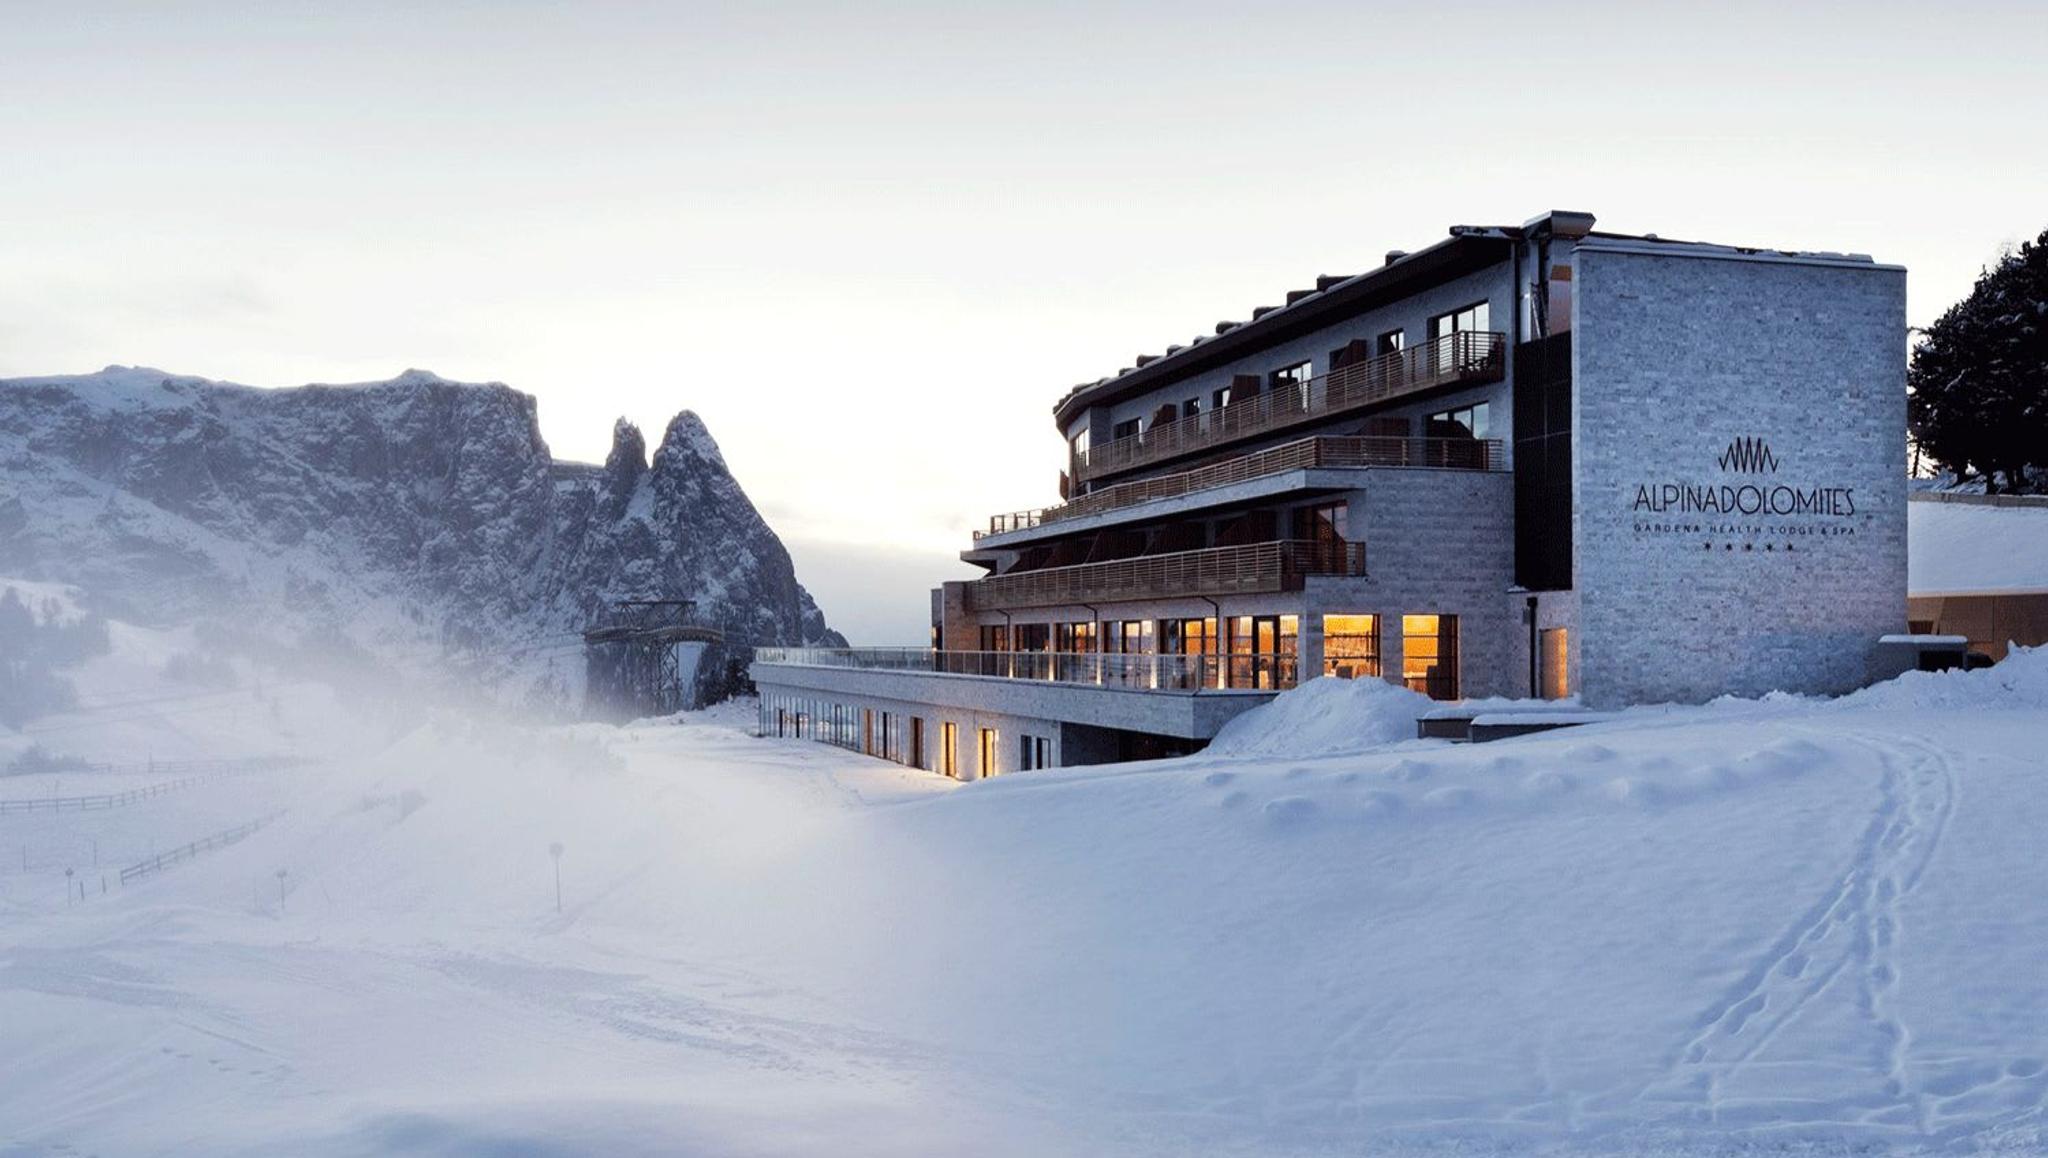 Alpina Dolomites : Merveilles dans la neige